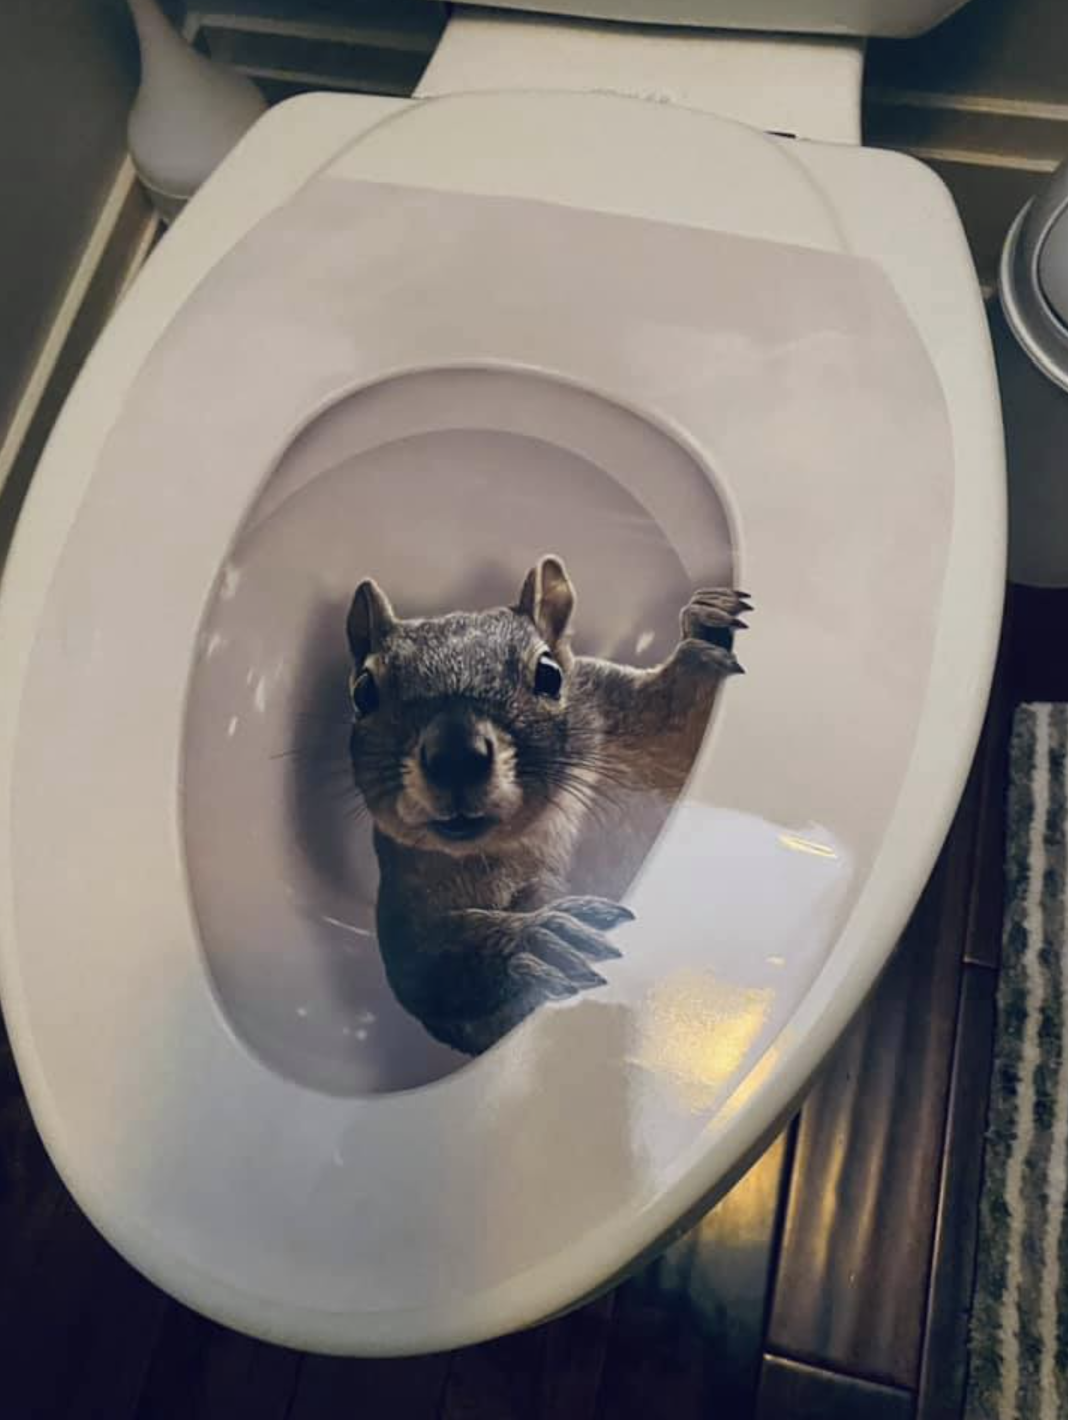 Squirrel in toilet April Fools Day prank